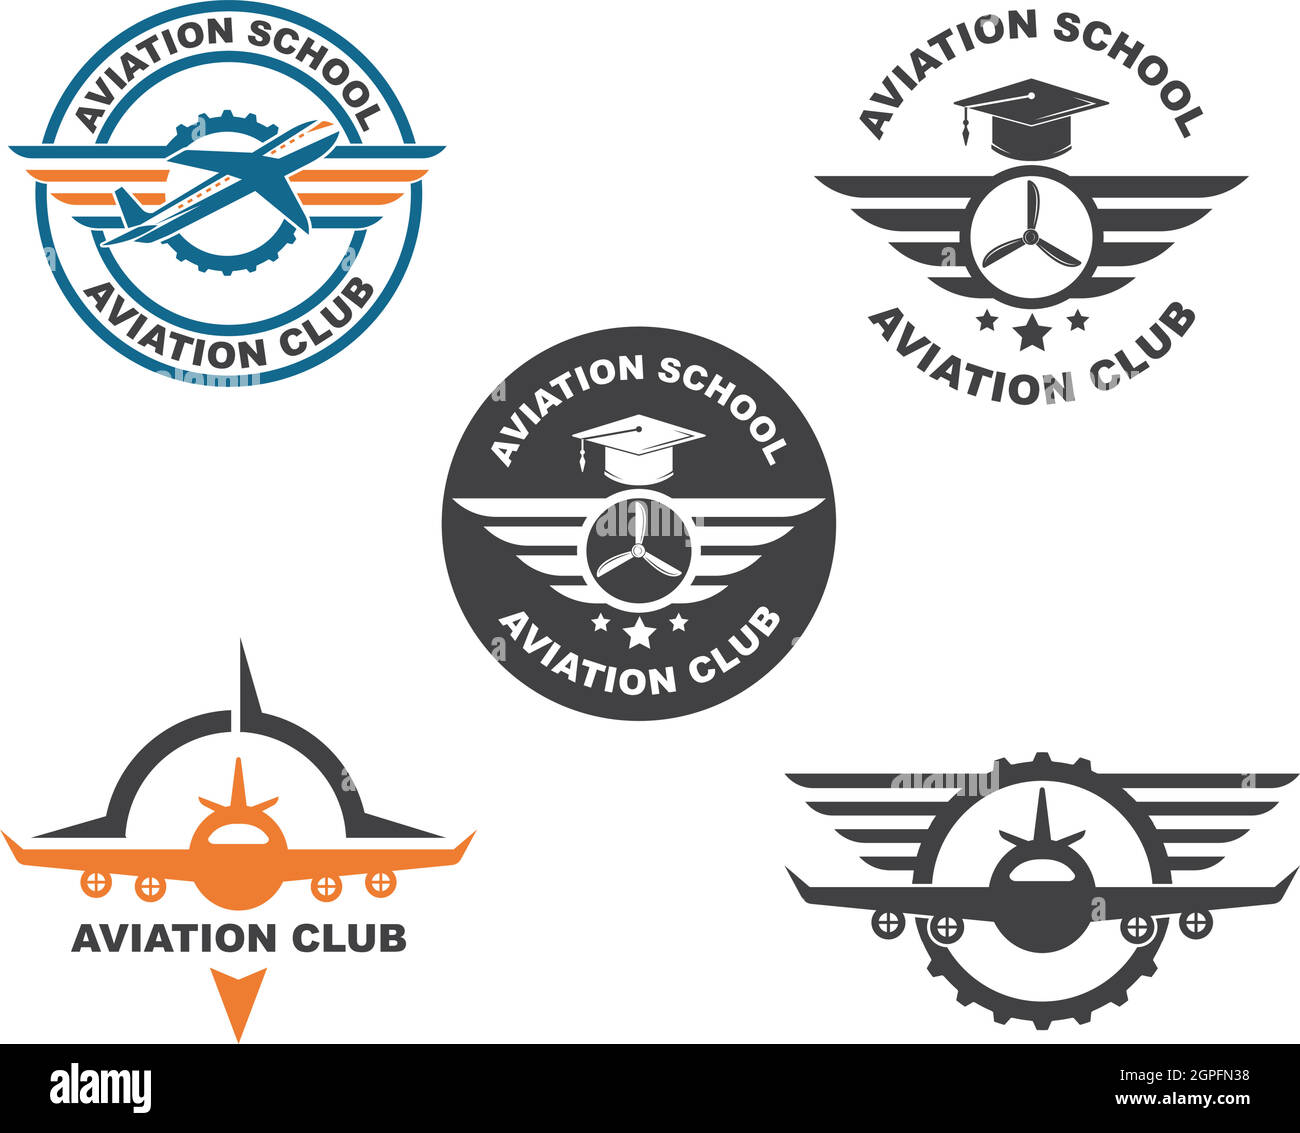 aviation academy vector illustration design Stock Vector